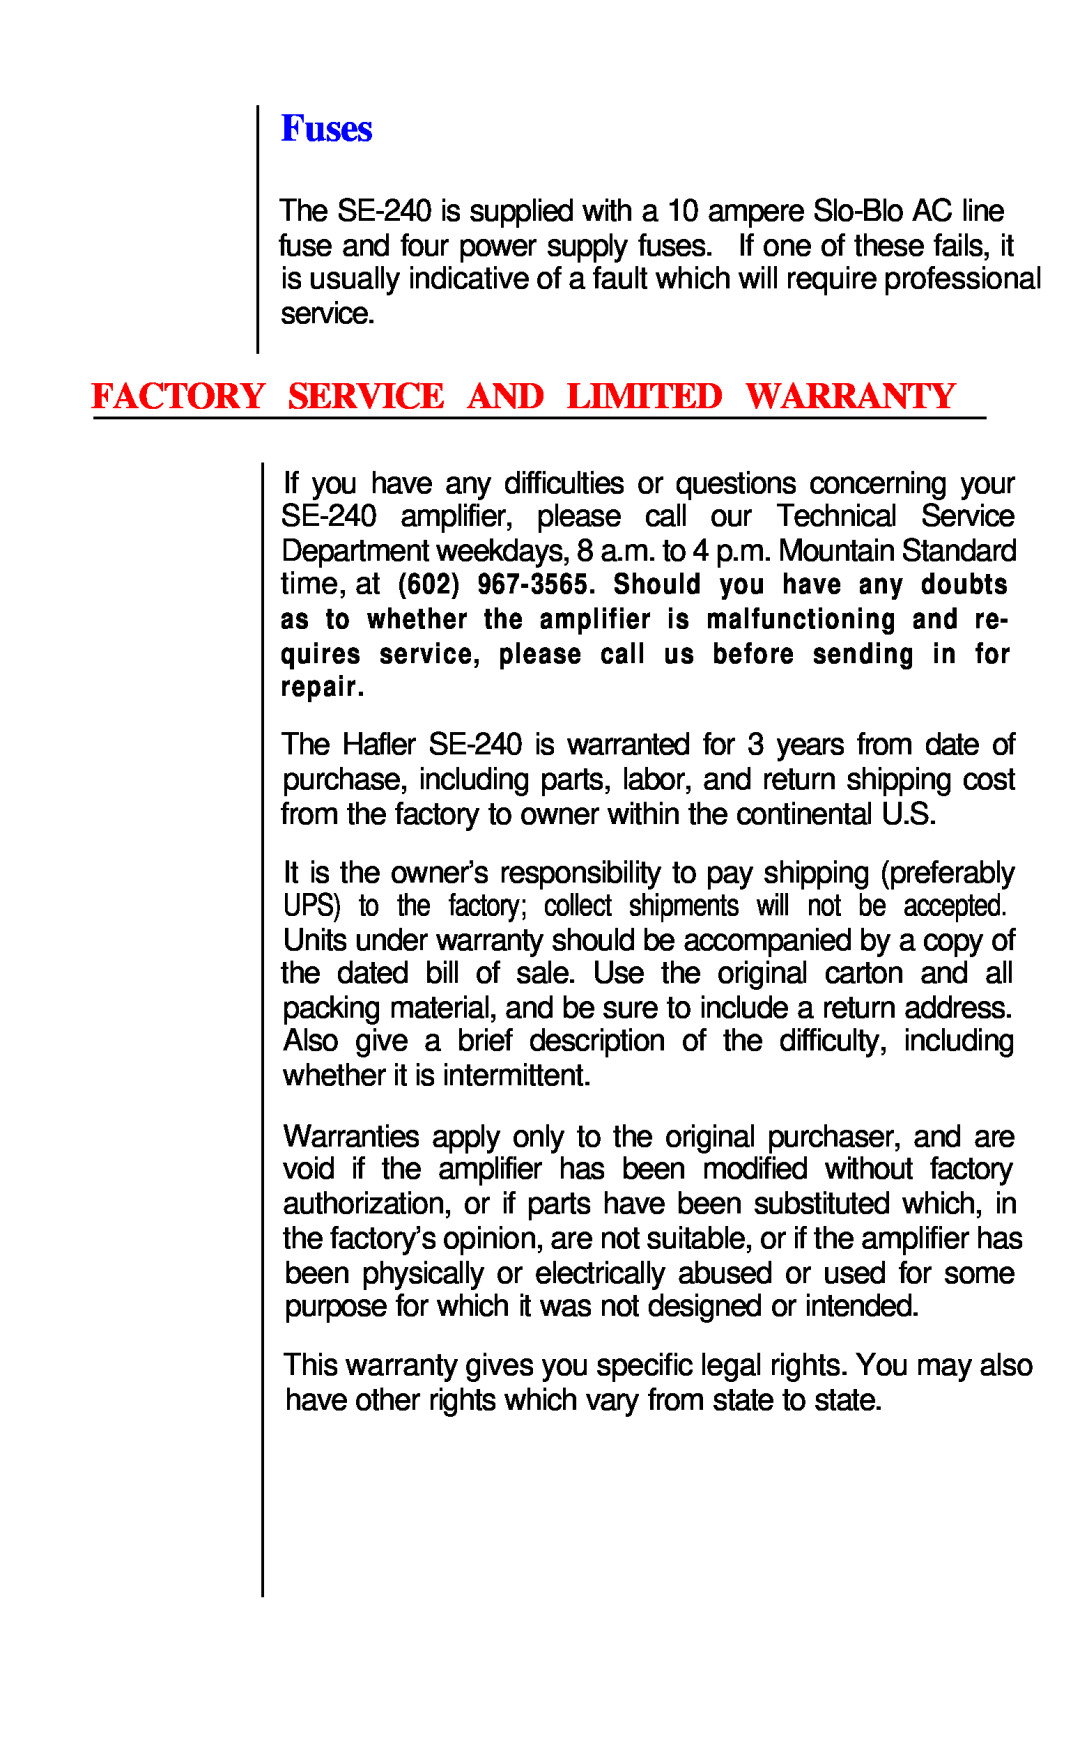 Hafler SE240 owner manual Fuses, Factory Service And Limited Warranty 